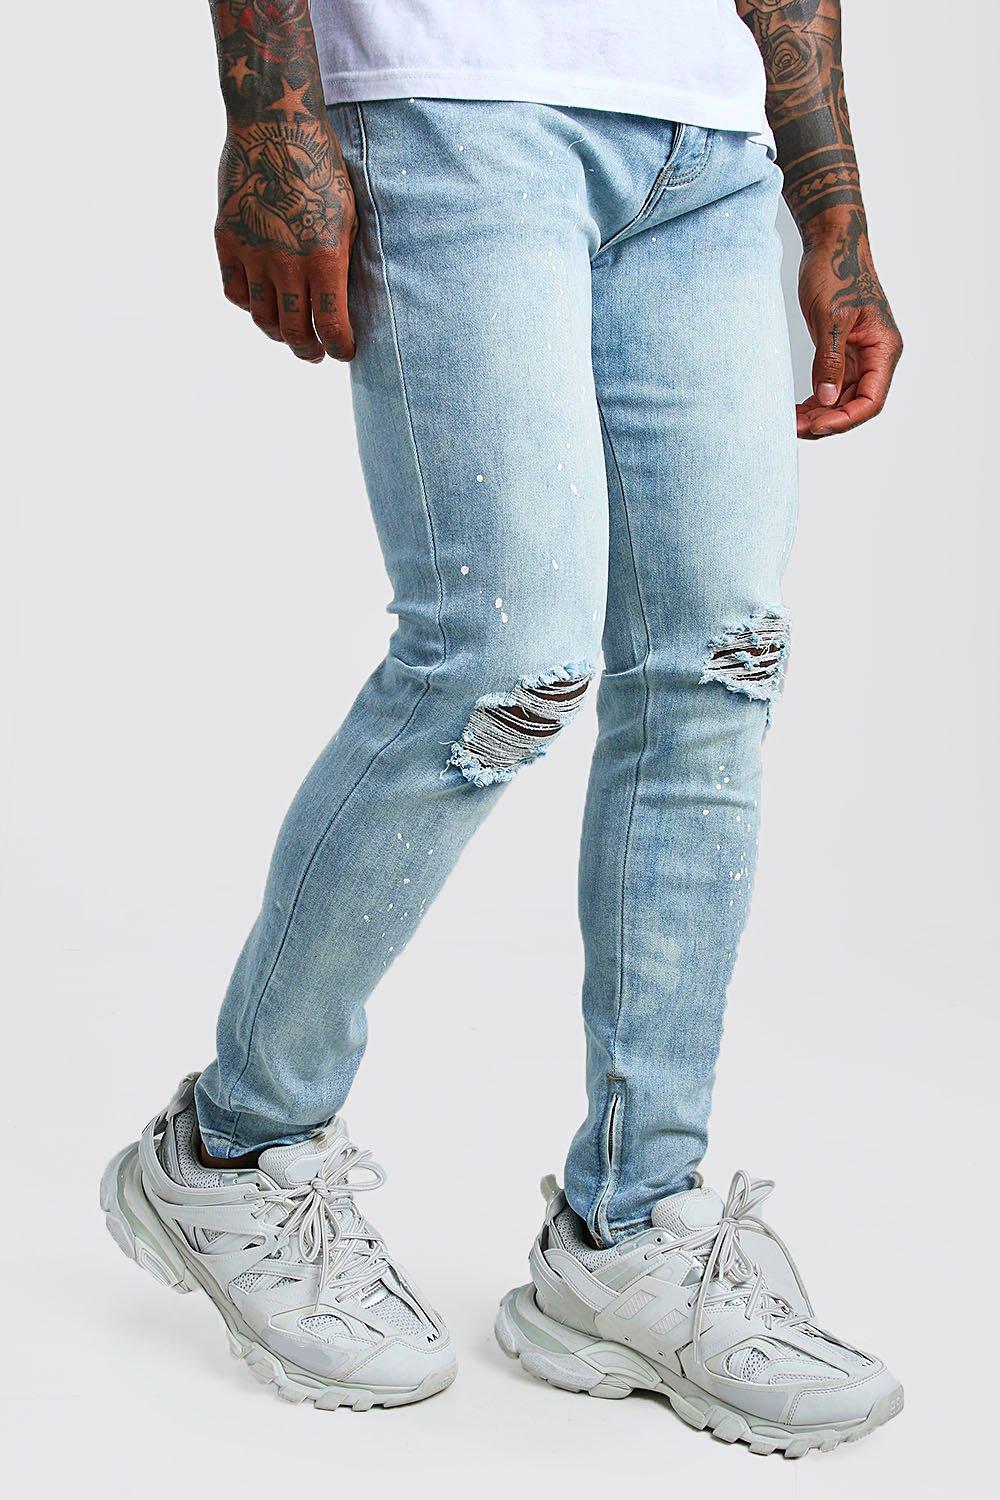 boohoo mens skinny jeans